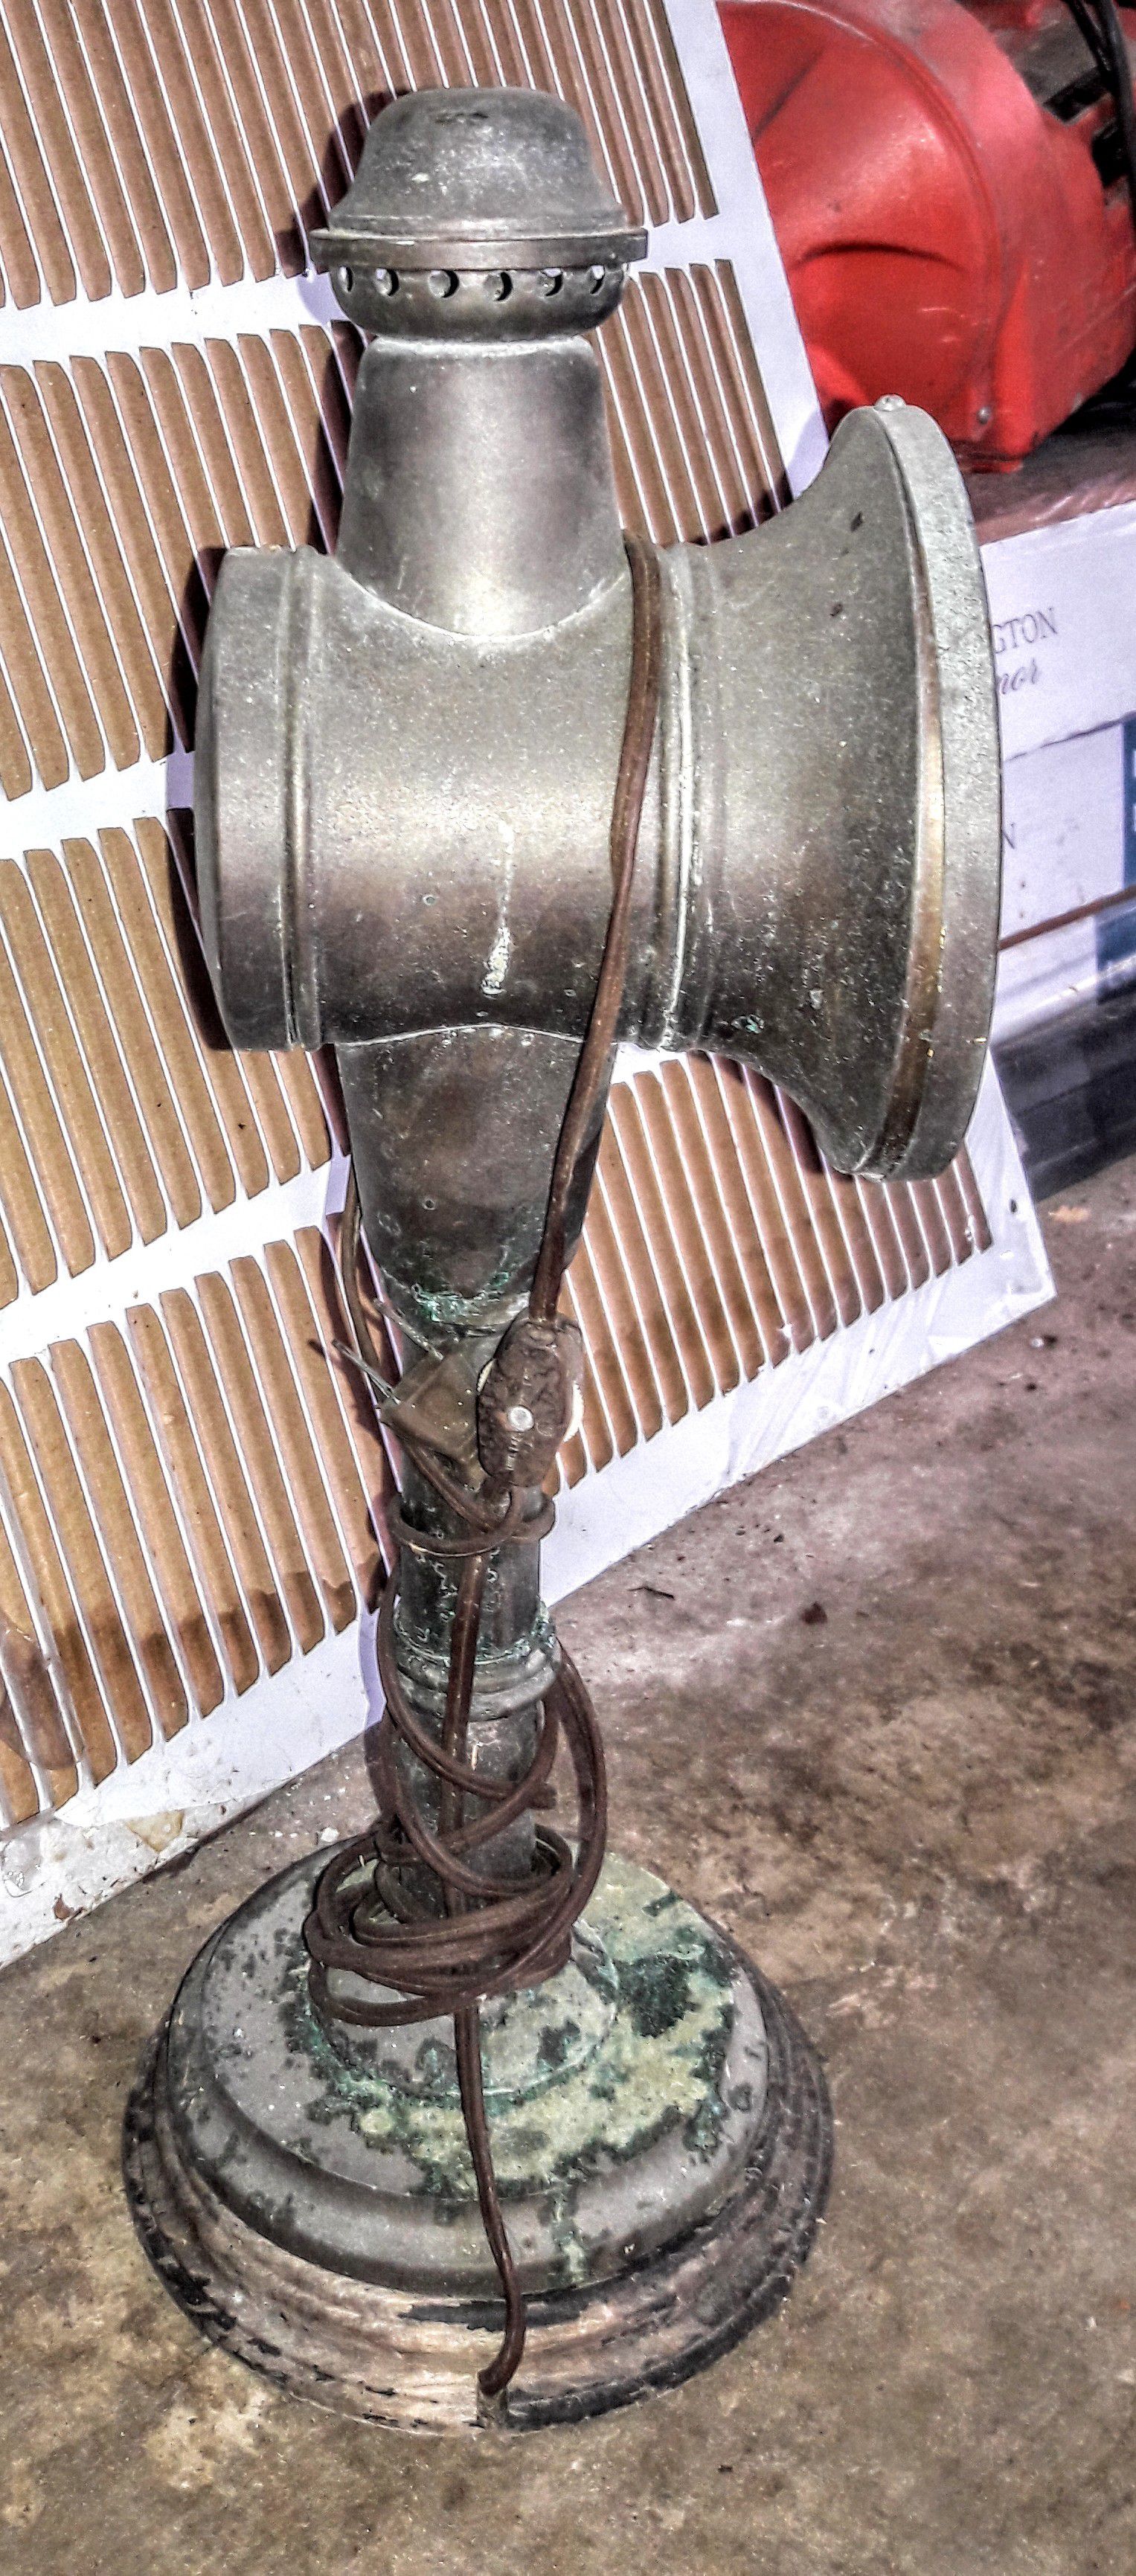 Antique rail lantern converted into electric lamp